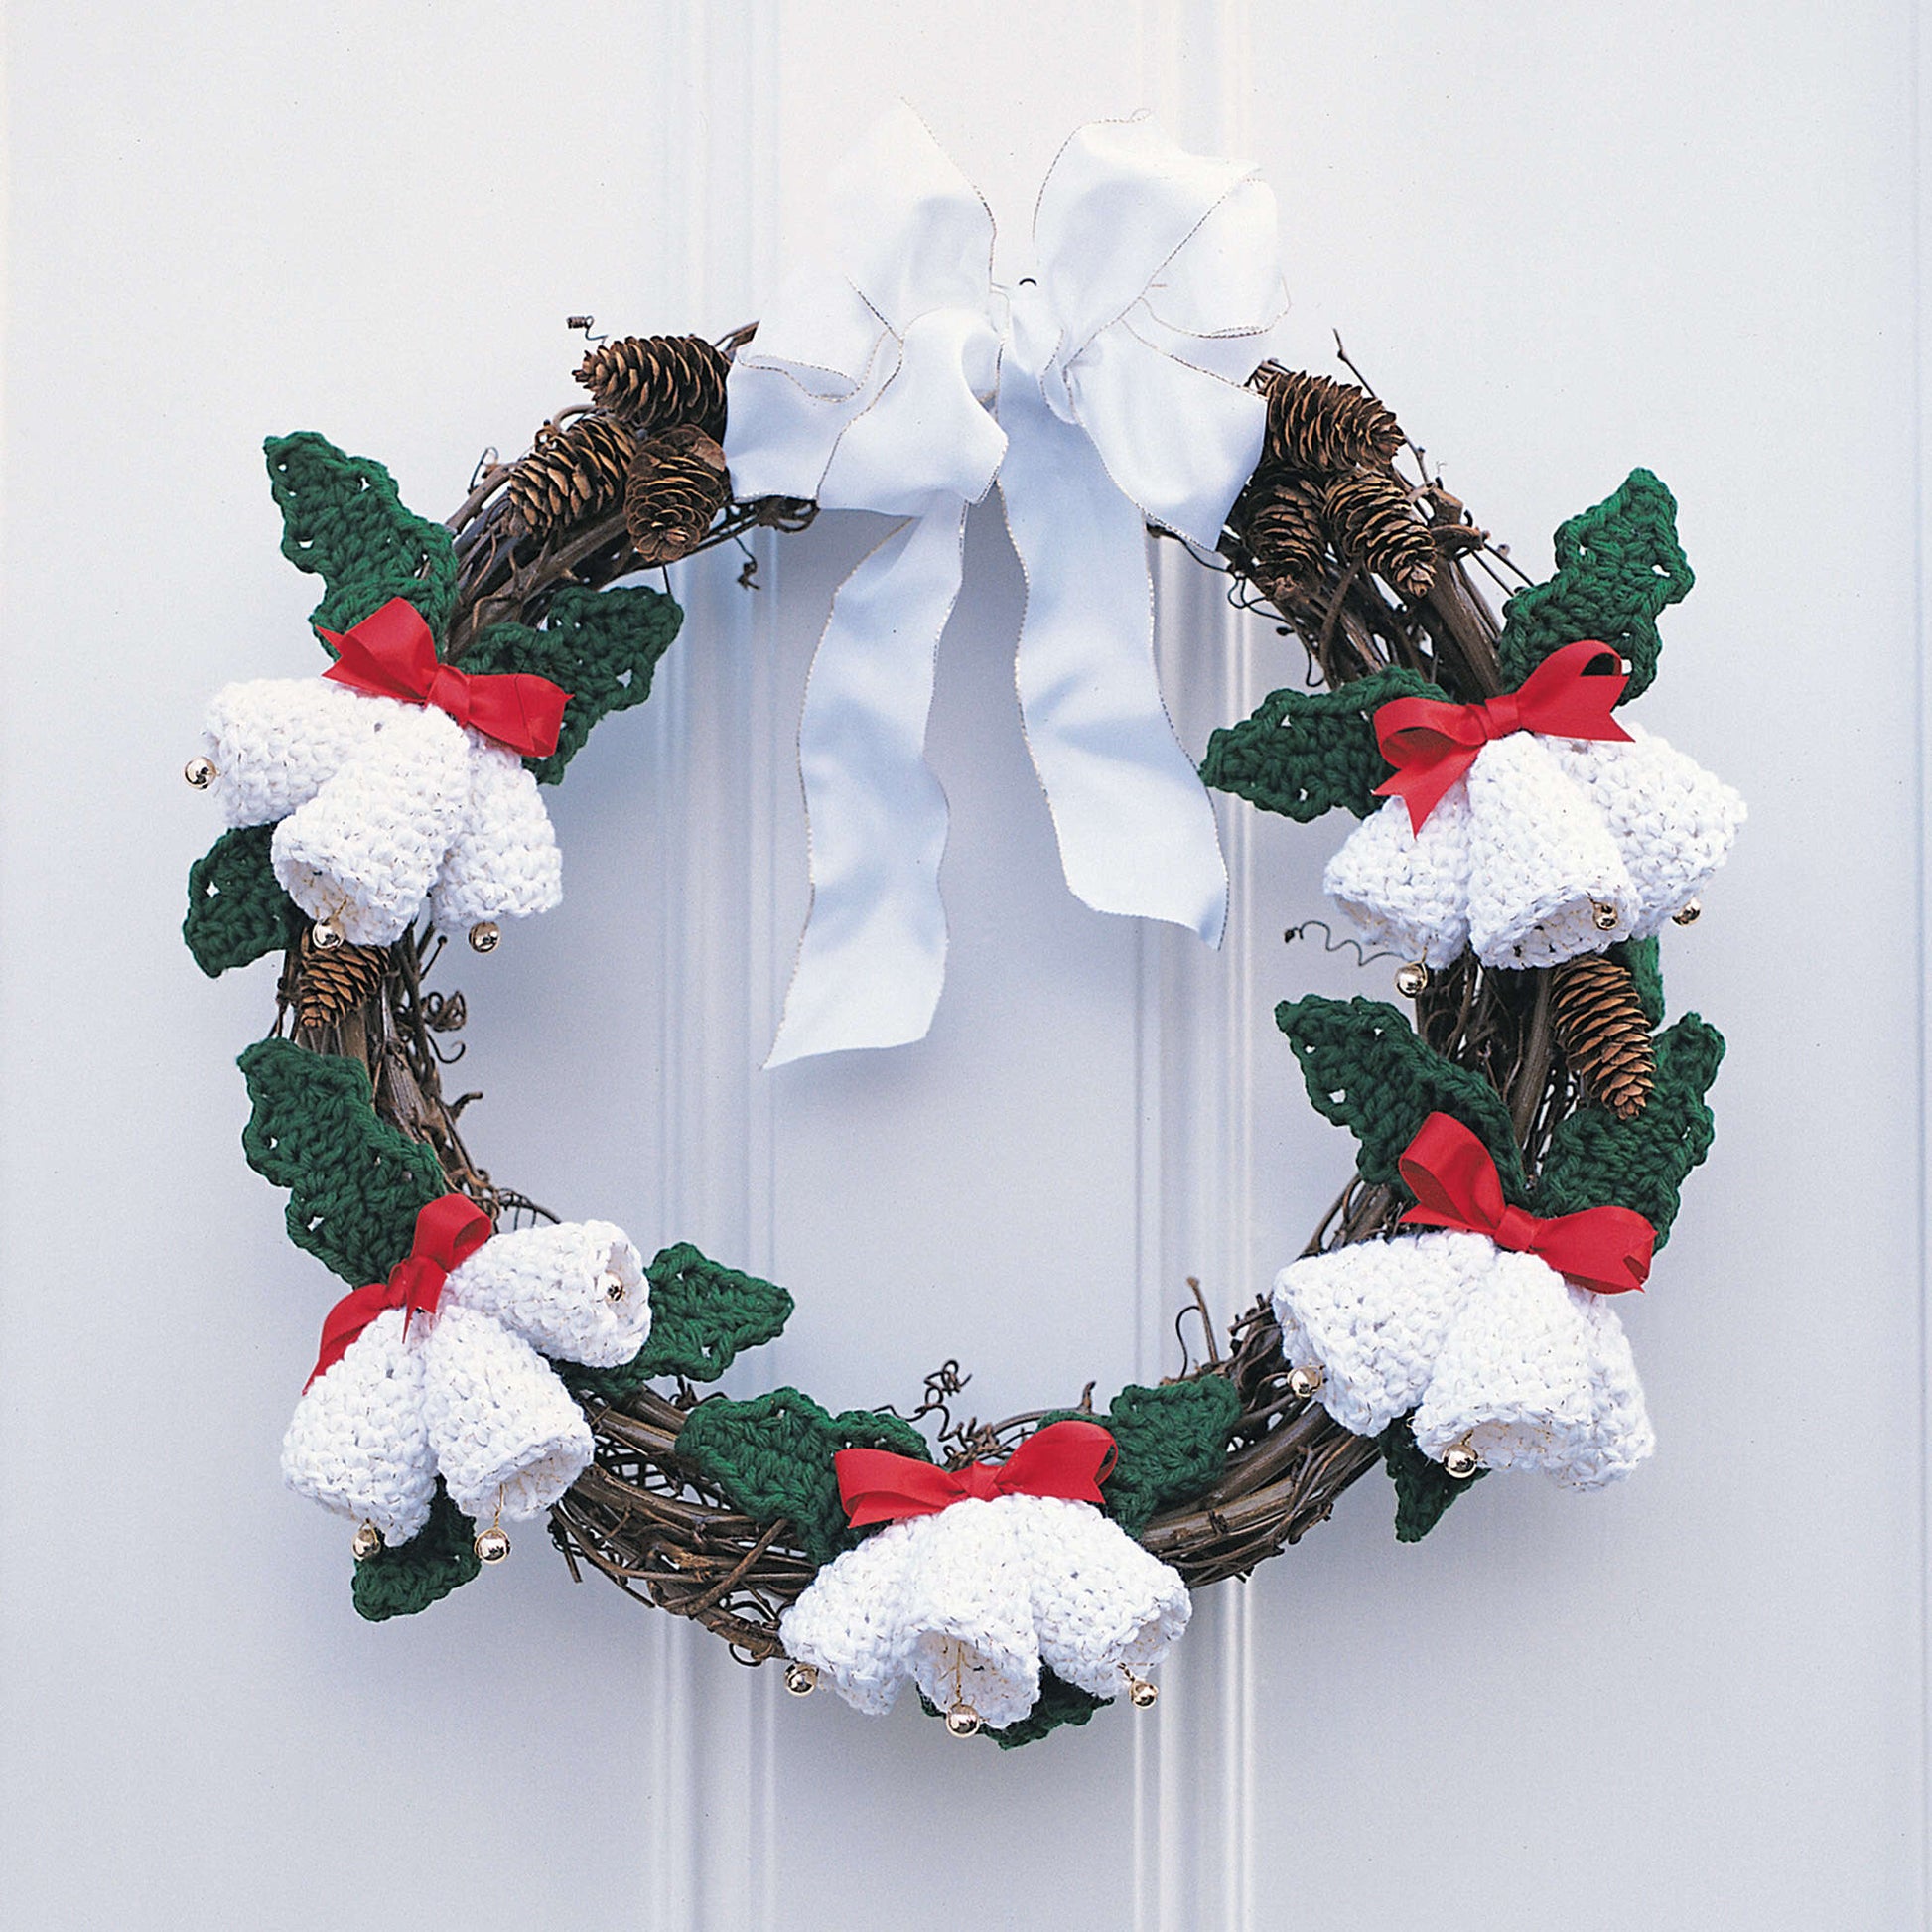 Free Lily Sugar'n Cream Seasons Greetings Wreath Crochet Pattern